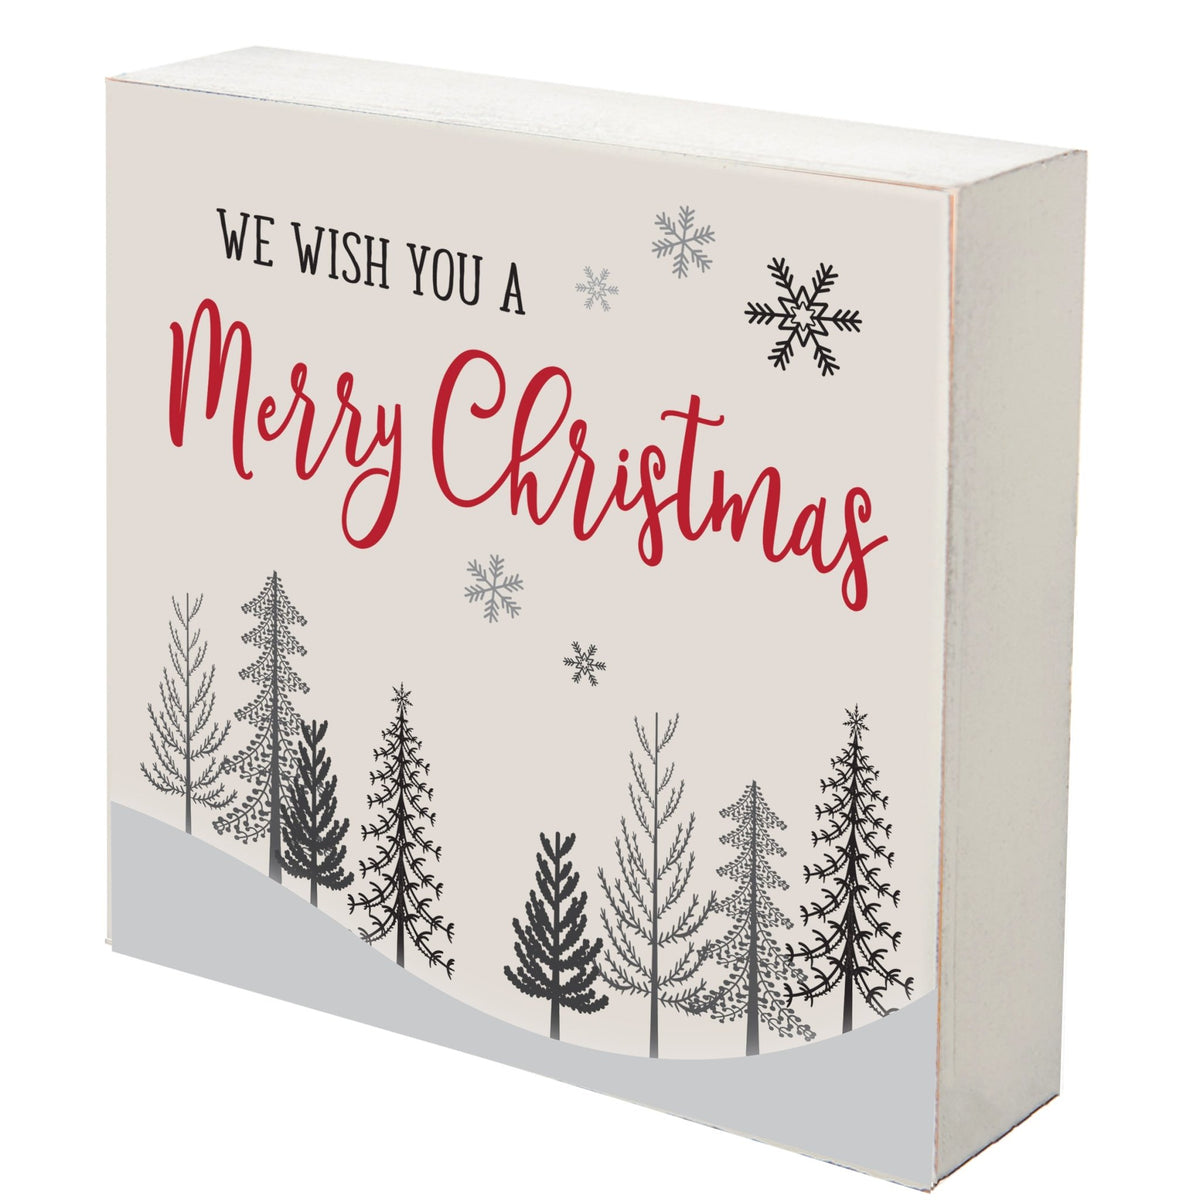 Christmas Shelf Décor - We Wish You A Merry Christmas - LifeSong Milestones